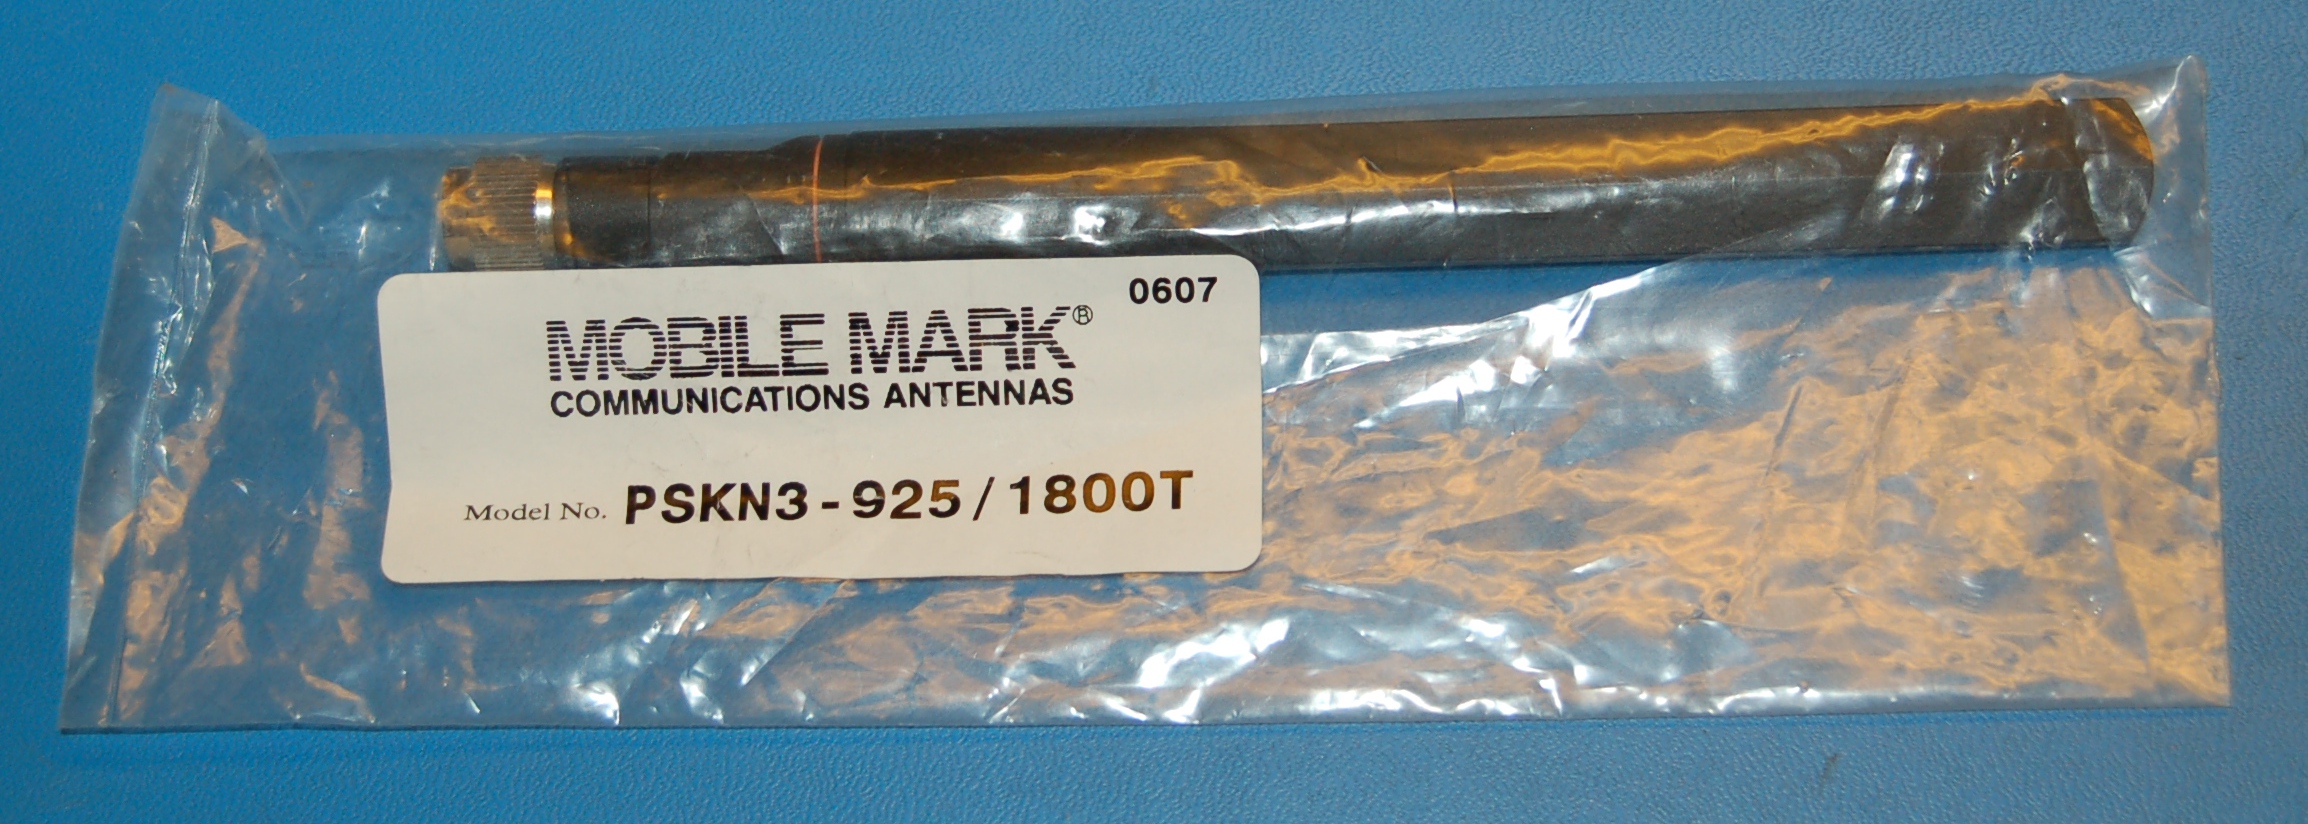 Mobile-Mark PKSN3 Antenna, Dual-Band, TNC - Click Image to Close